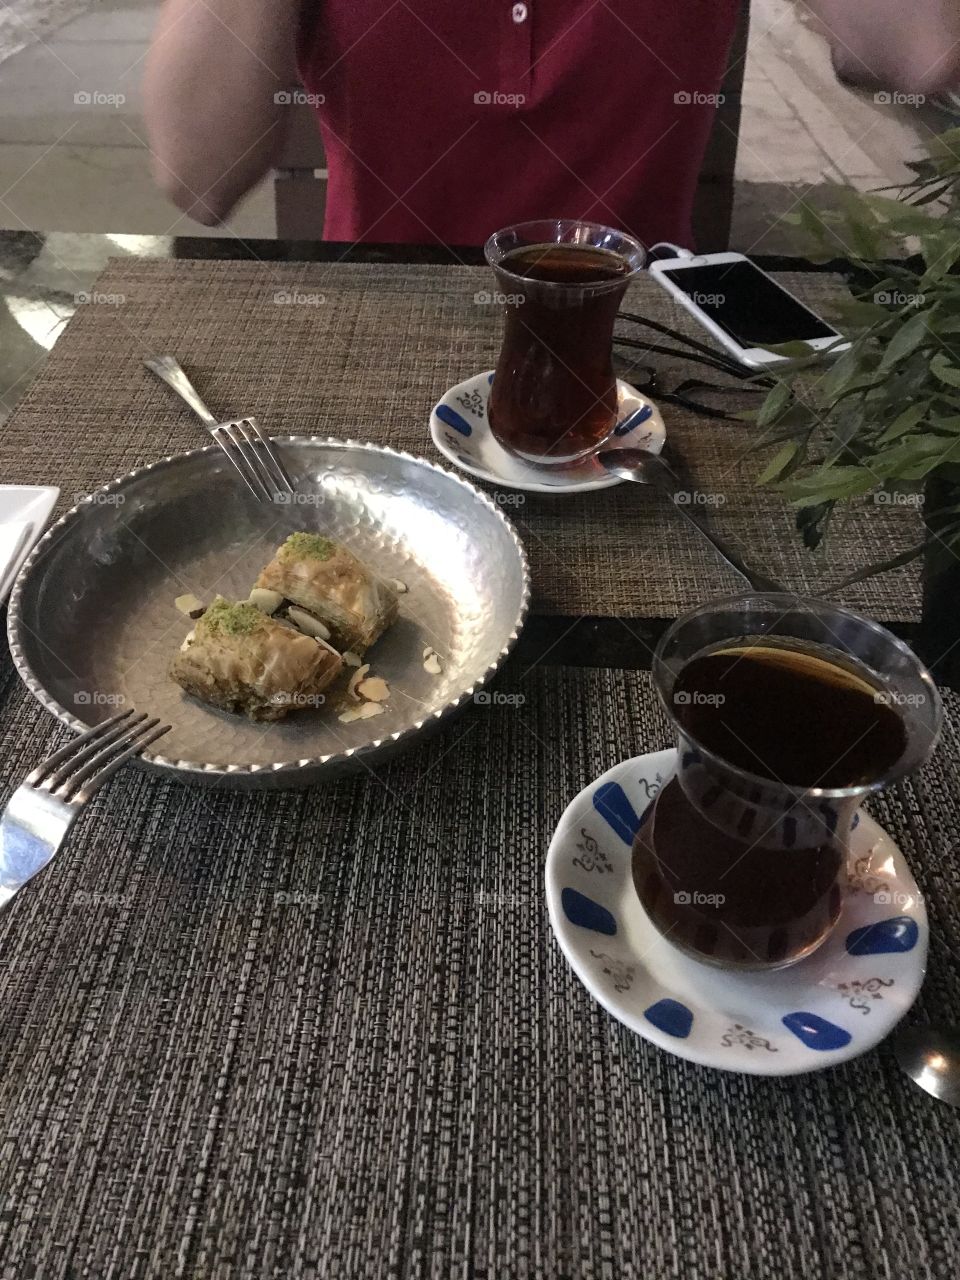 Baklava and turkish tea in USA